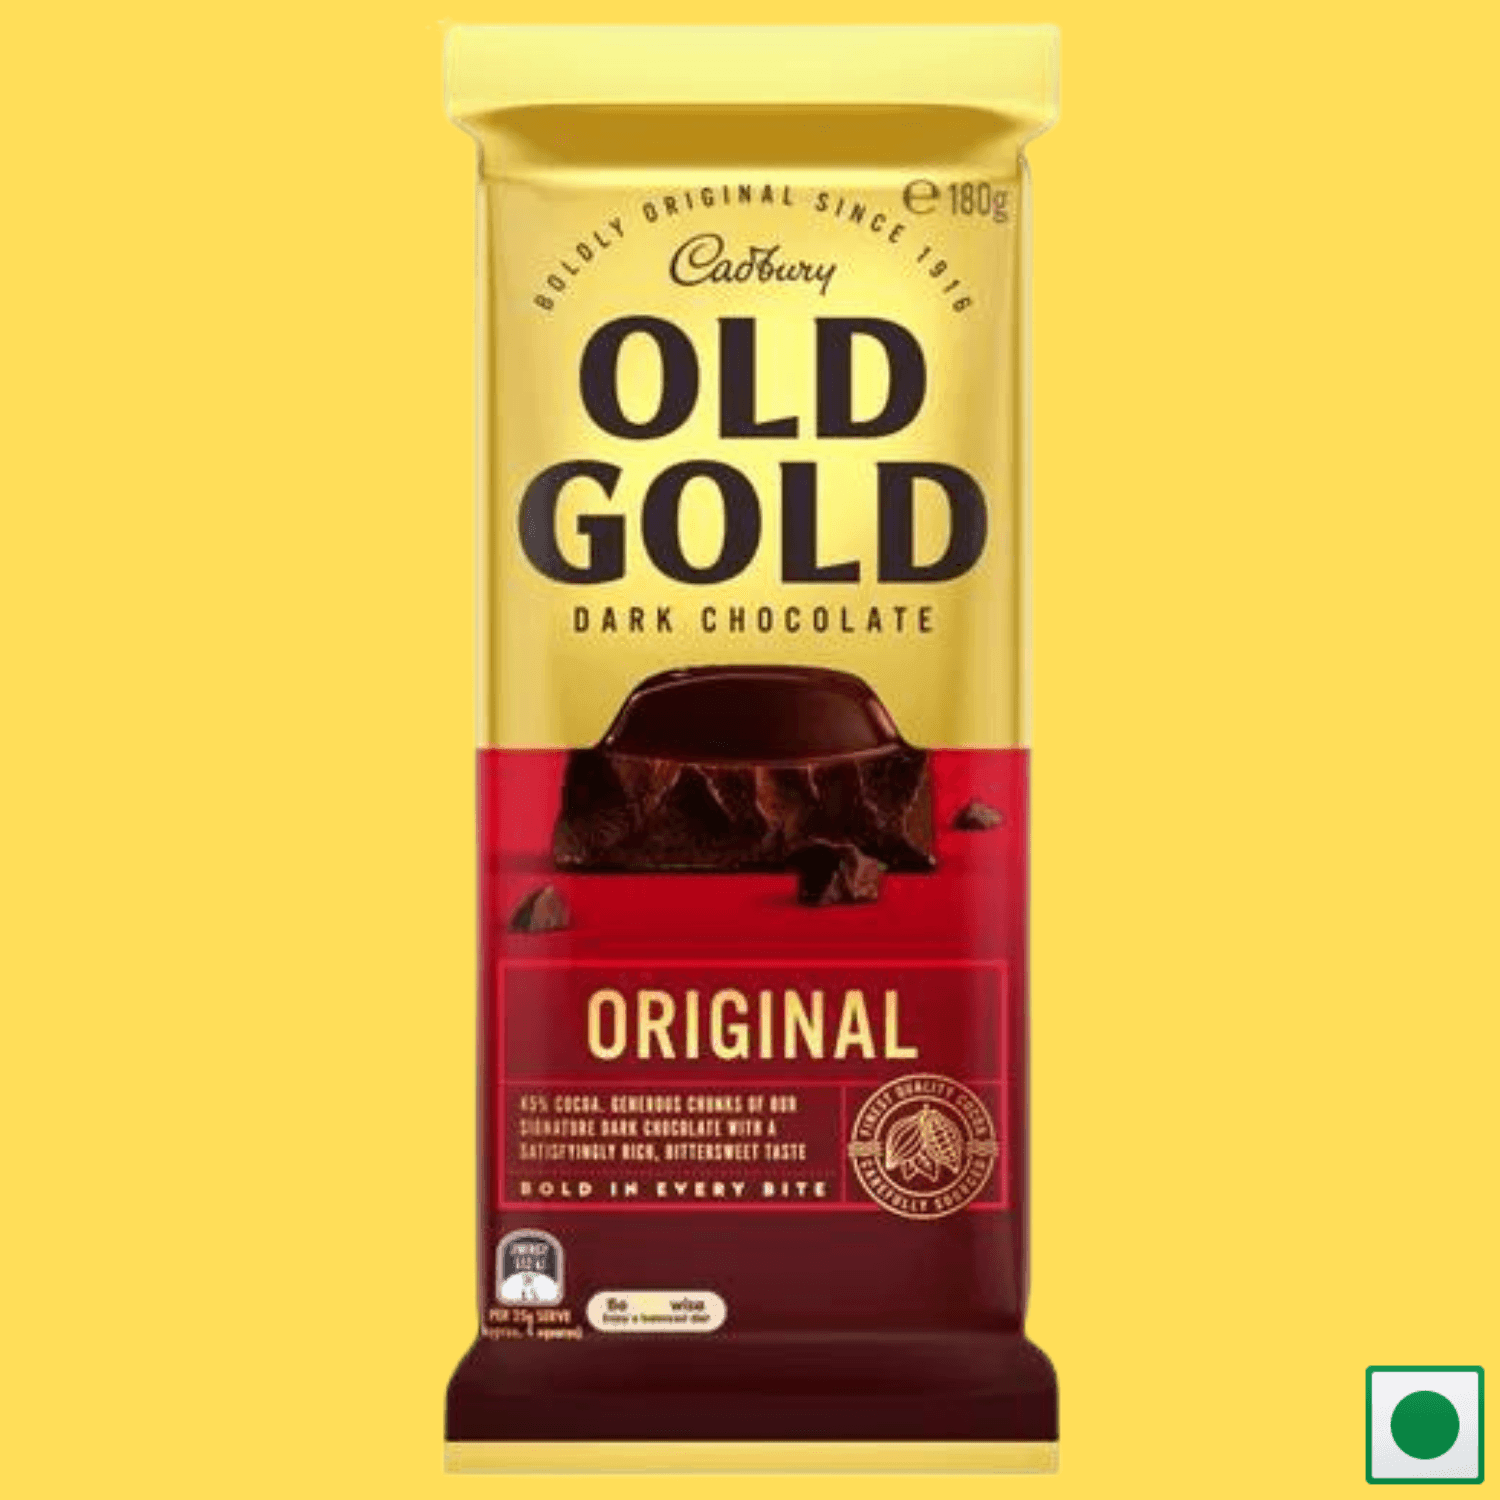 Cadbury Old Gold Dark Chocolate Original, 180g (Australian Imported) - Super 7 Mart